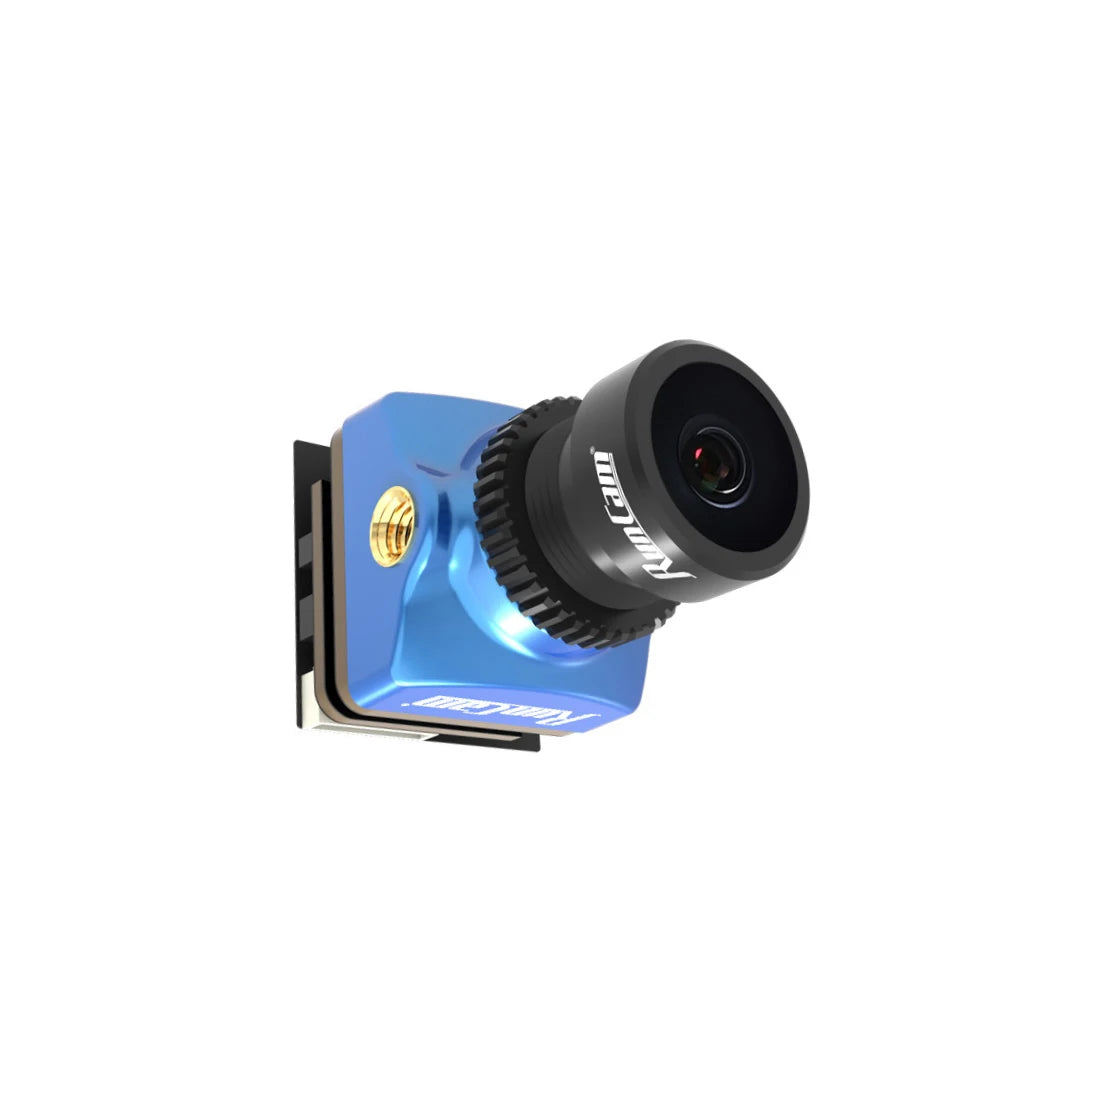 RunCam Phoenix 2 Analog FPV Camera, Phoenix 2 Nano has a 1/2 ”large-size high-quality image sensor and high